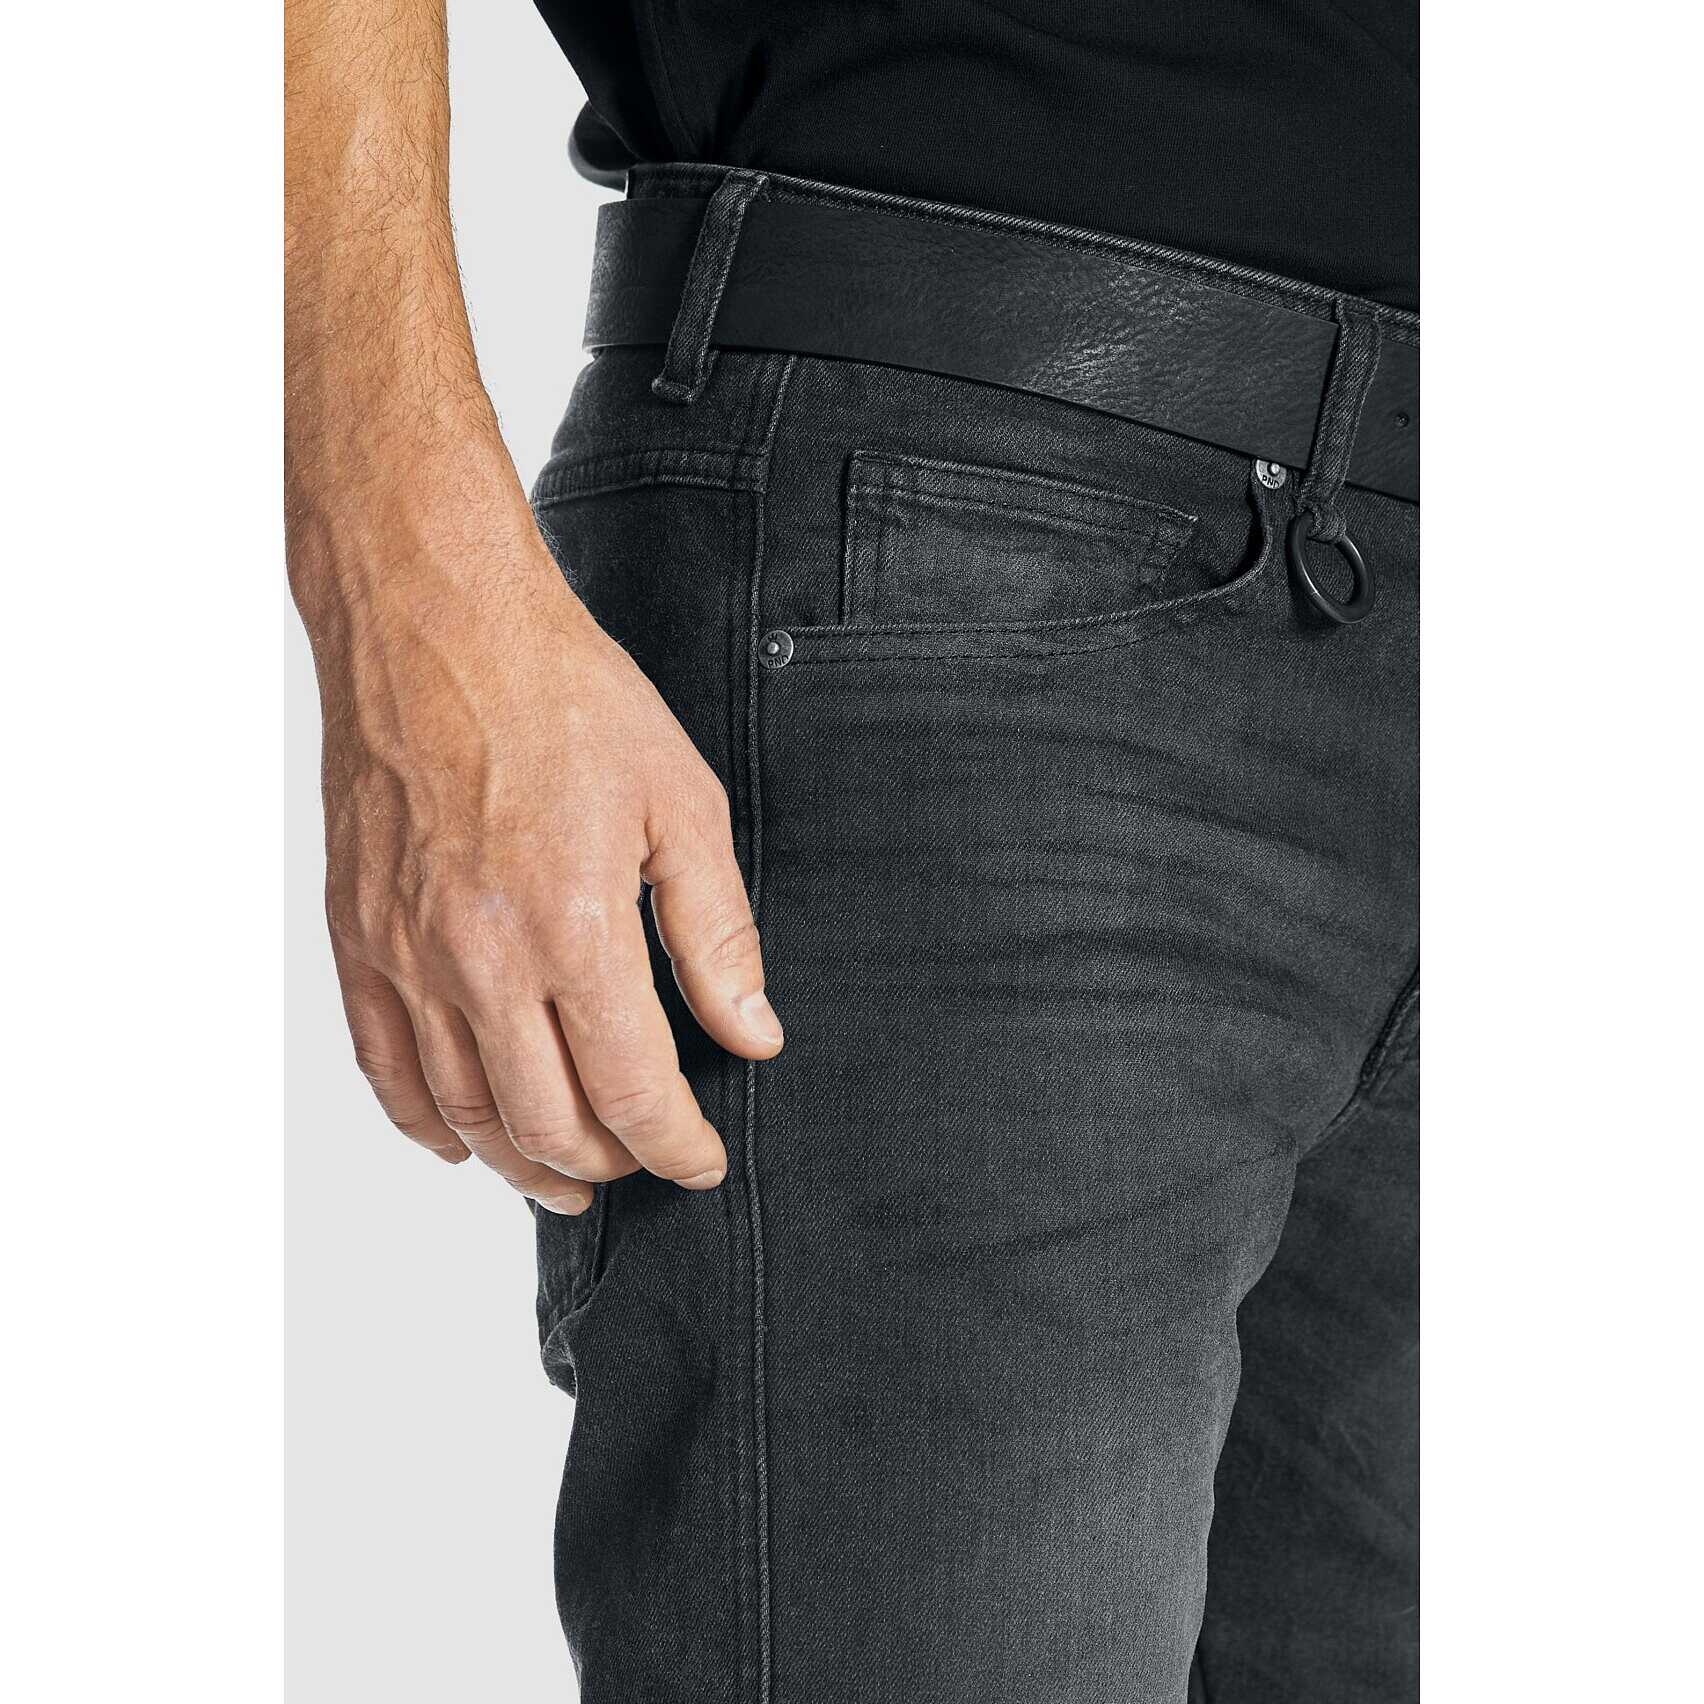 Jeans Moto Pando Moto Robby Slim Nero - L34 Vendita Online 